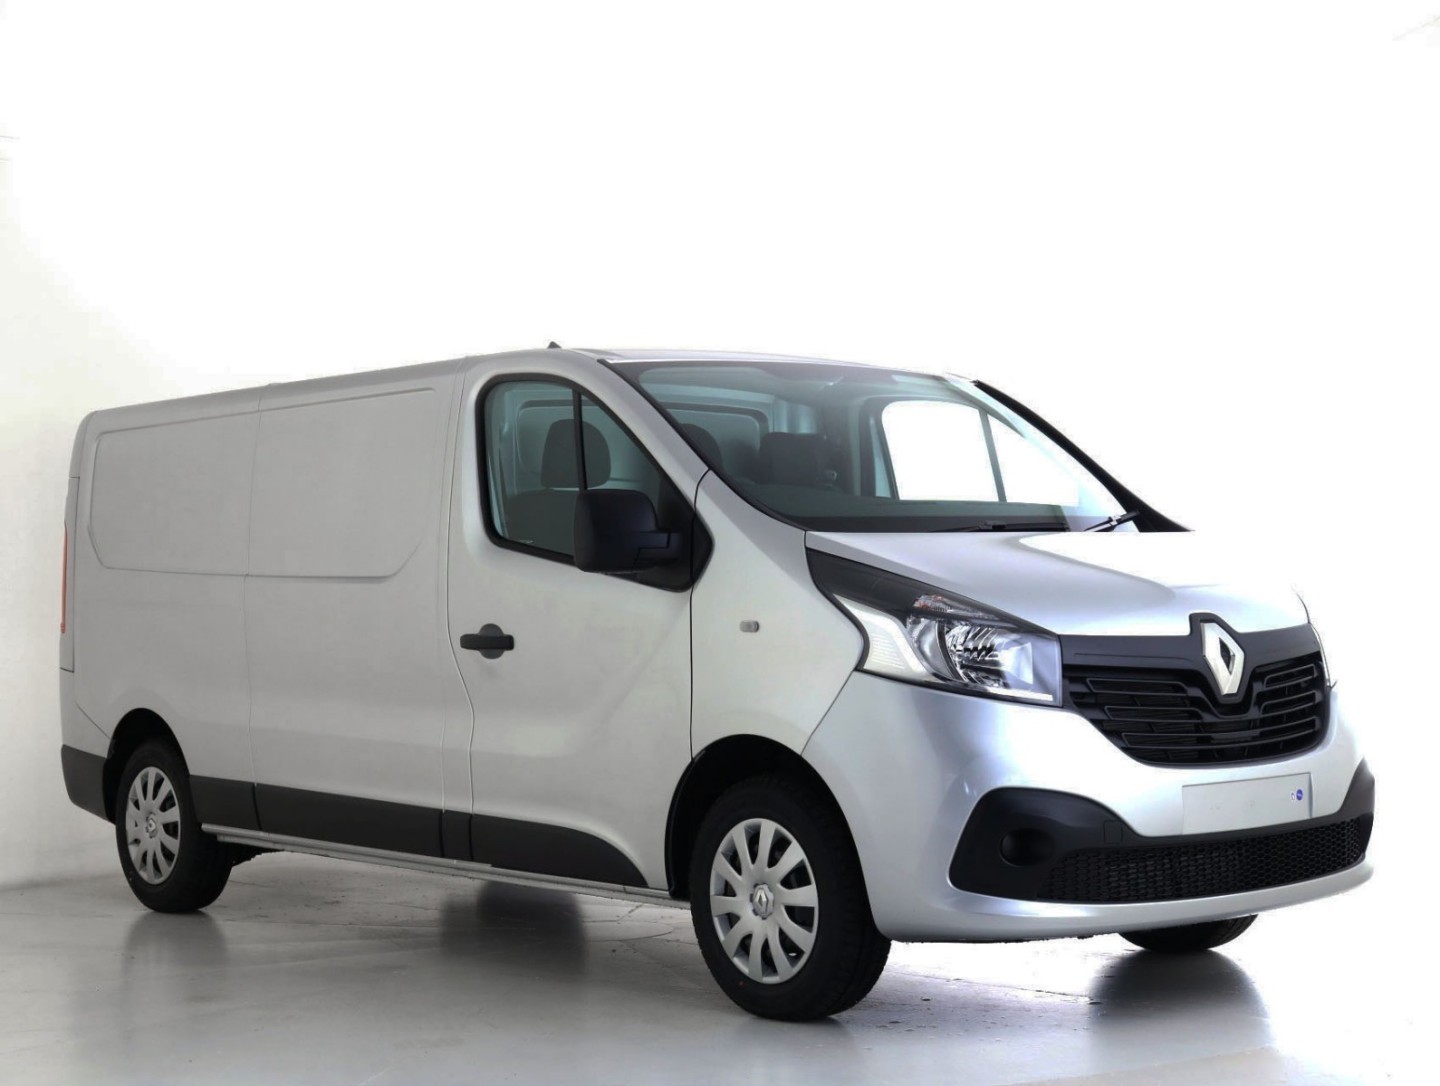 New Trafic - adaptable equipment - Renault UK